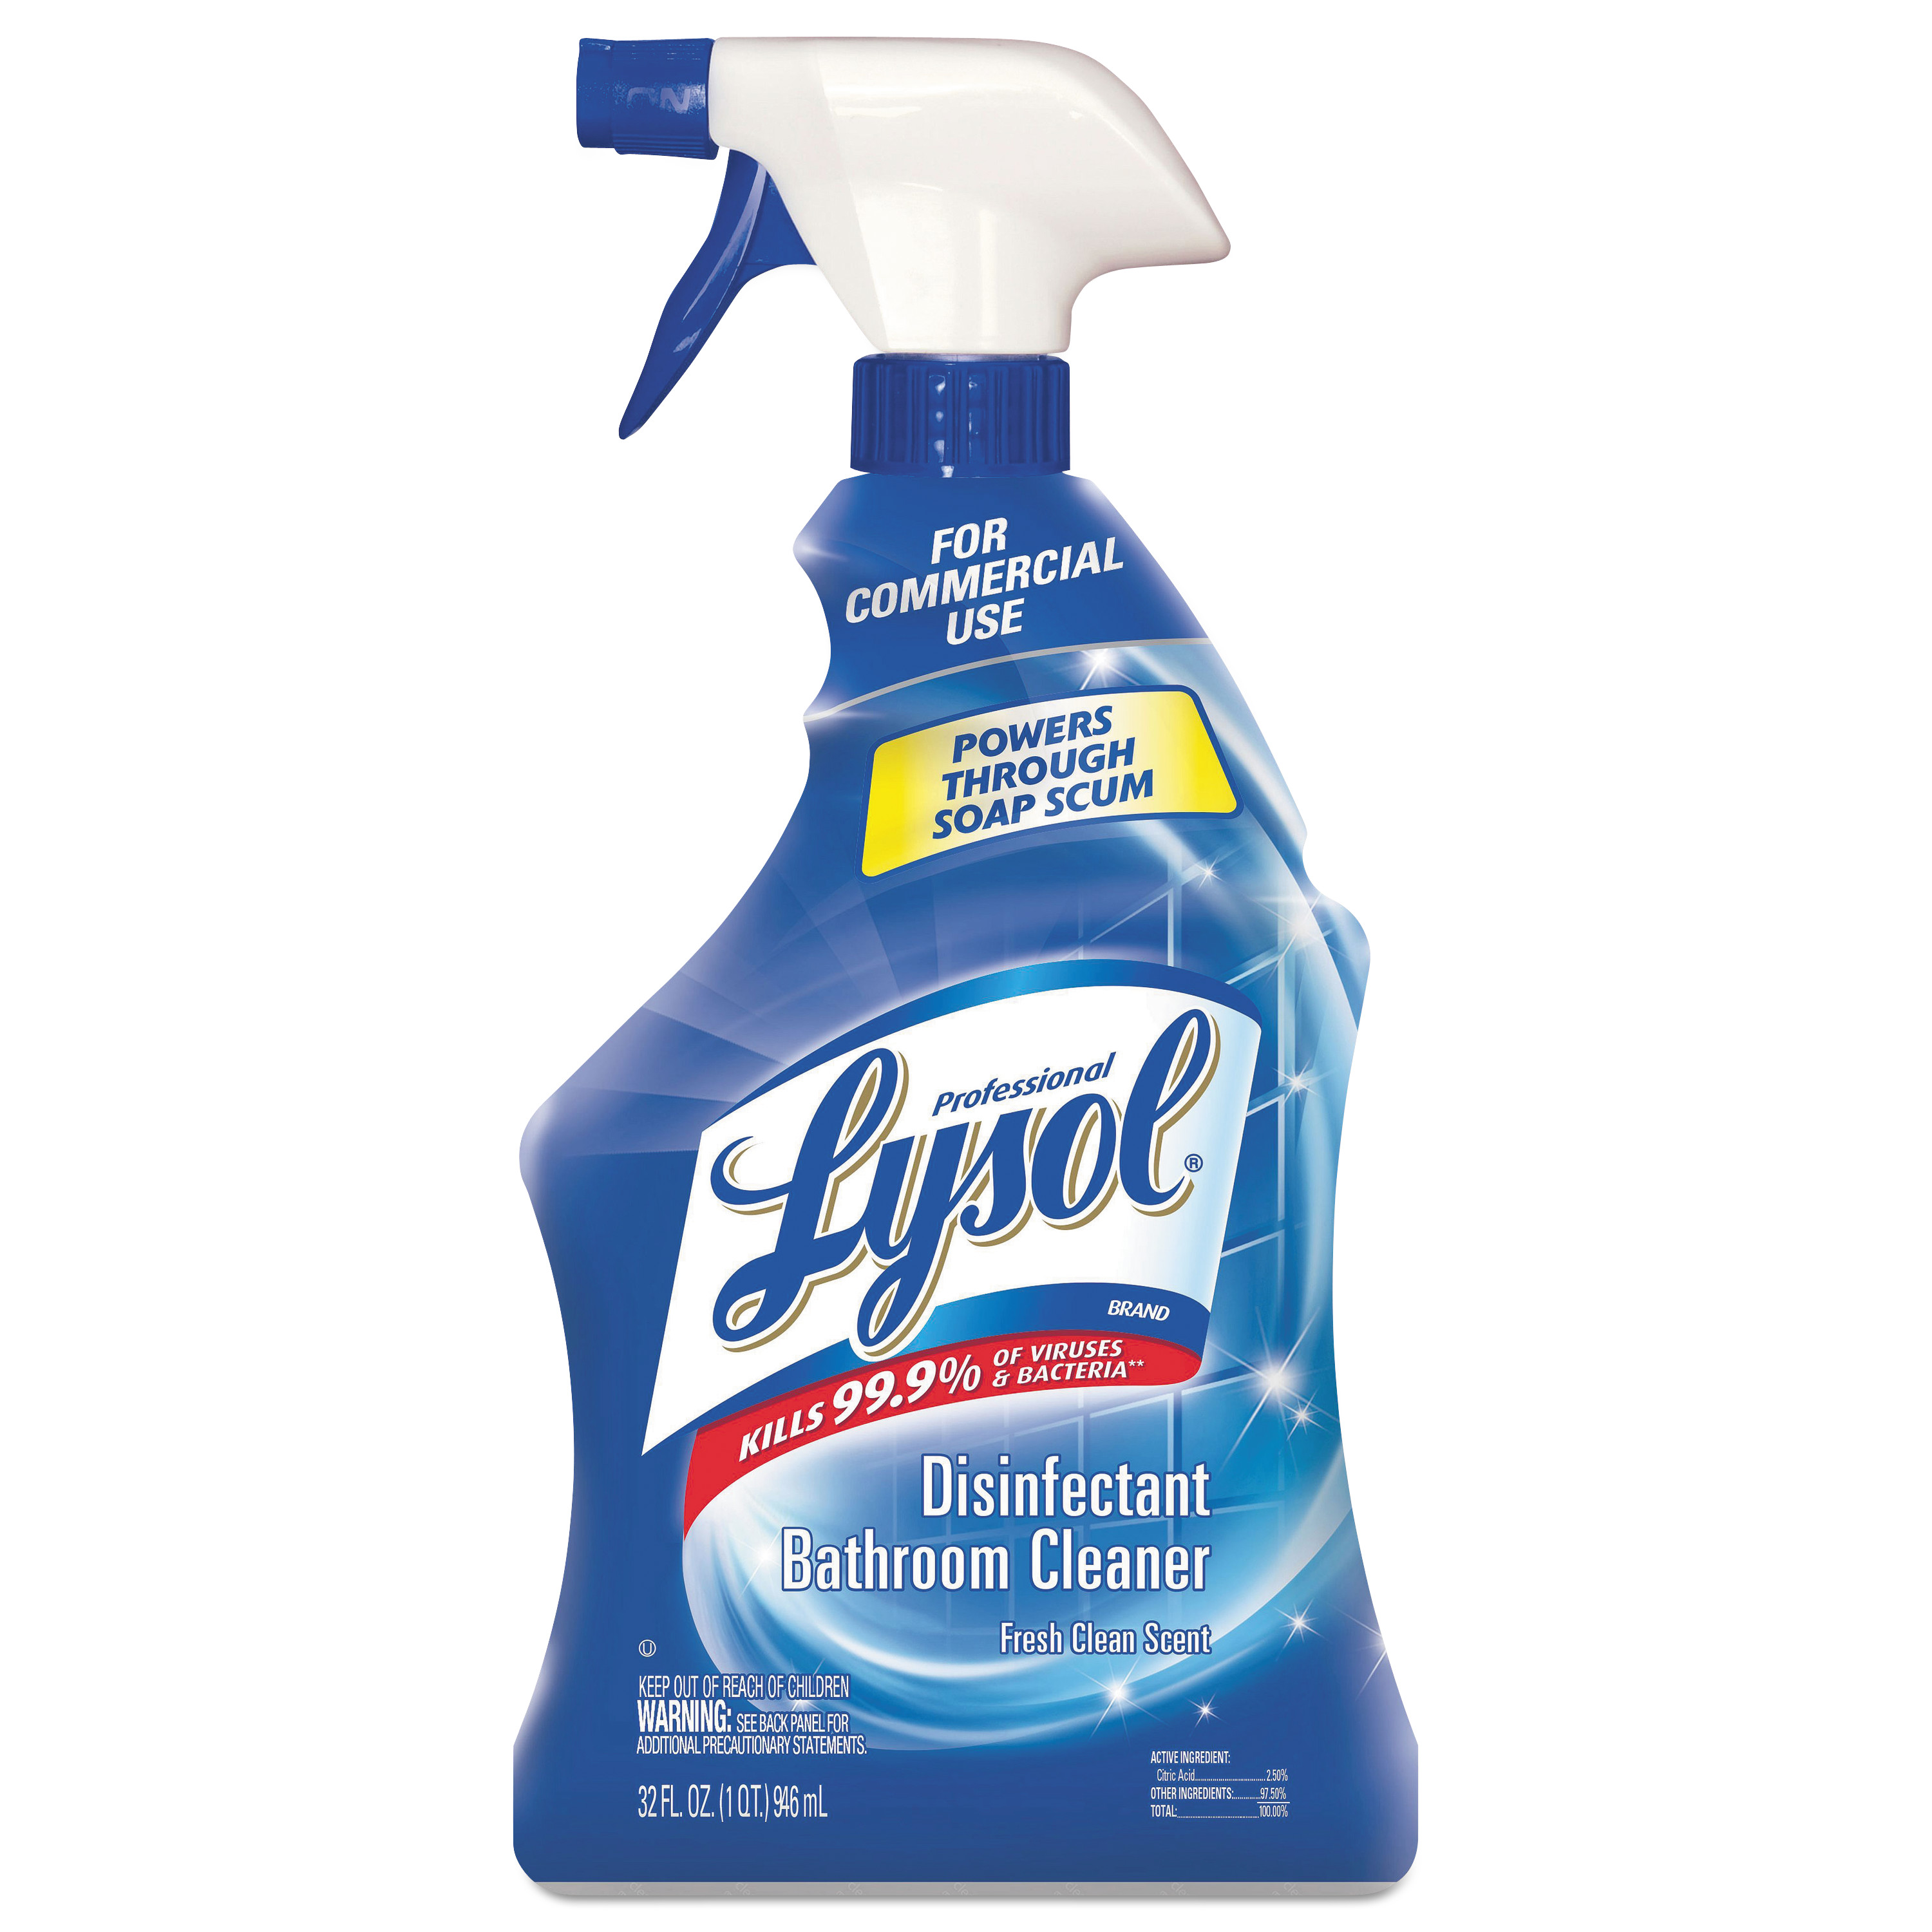  Professional LYSOL Brand 36241-04685 Disinfectant Bathroom Cleaner, 32oz Spray Bottles, 12/Carton (RAC04685CT) 